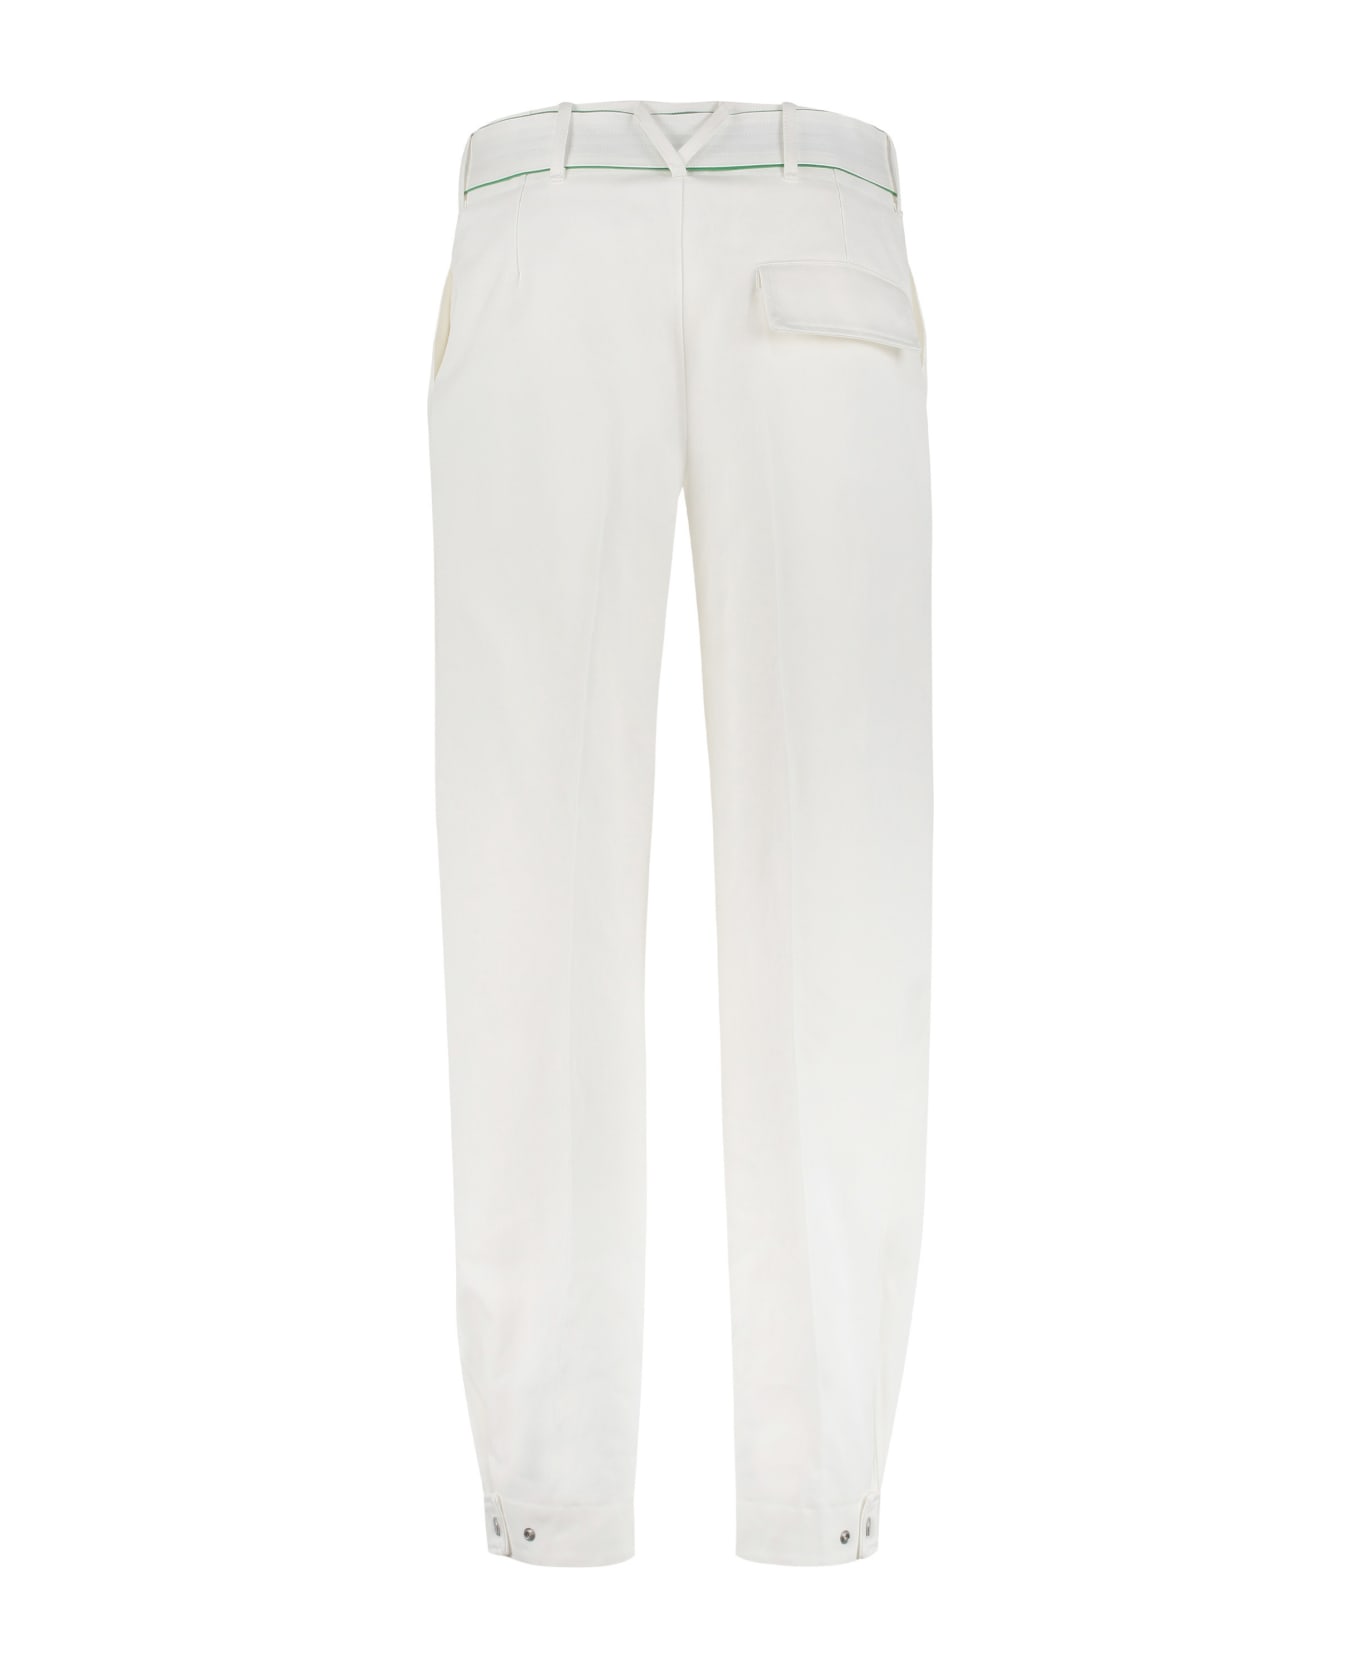 Bottega Veneta Cotton Trousers - White